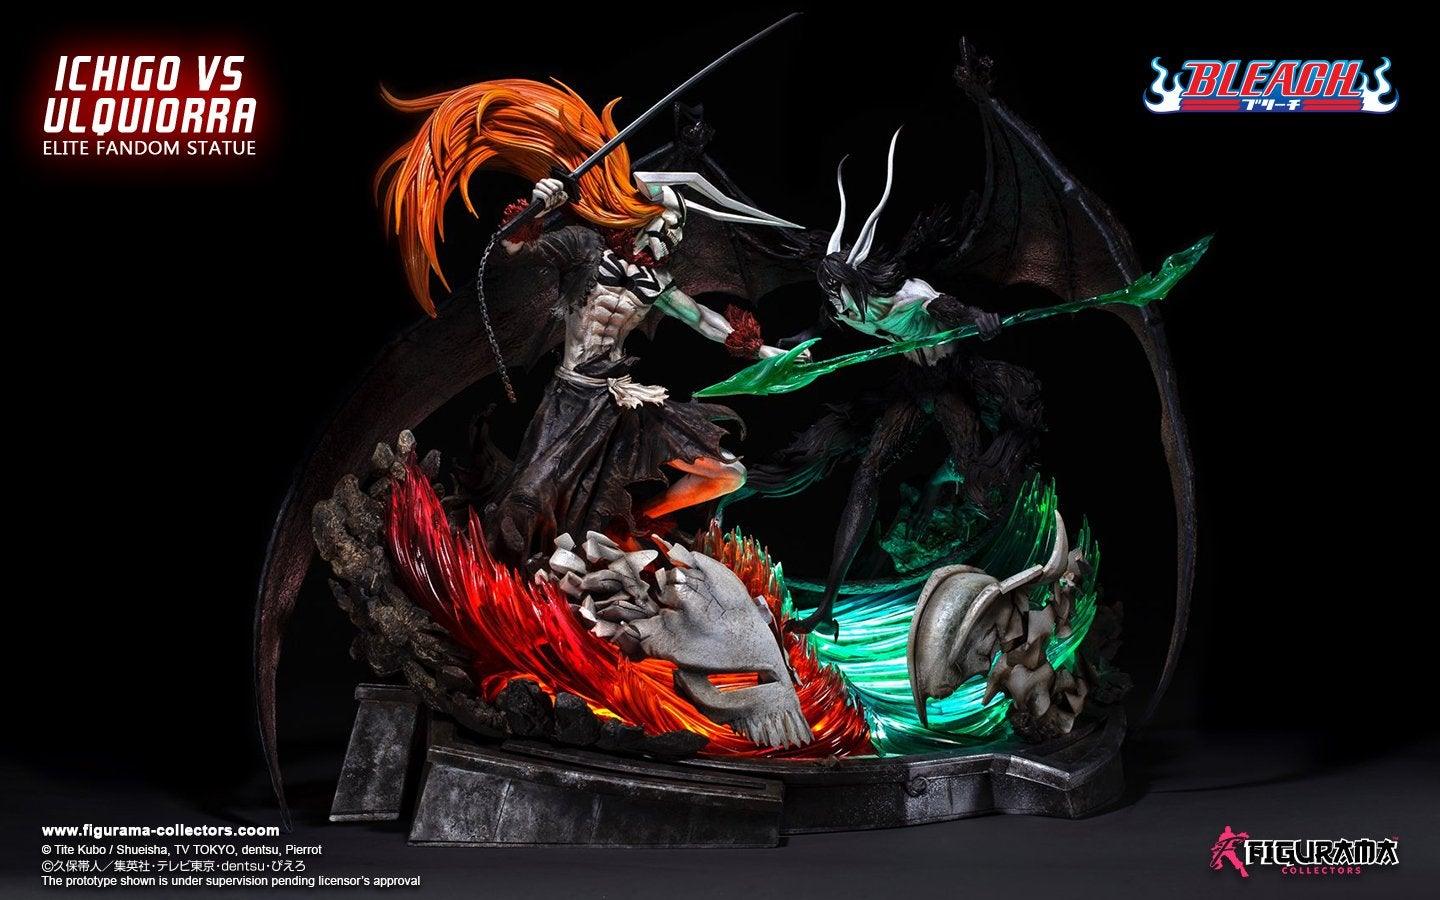 Bleach- Ichigo vs Ulquiorra Elite Fandom Statue- Flexible Plan for Six Months Resin Figures Figurama Collectors 